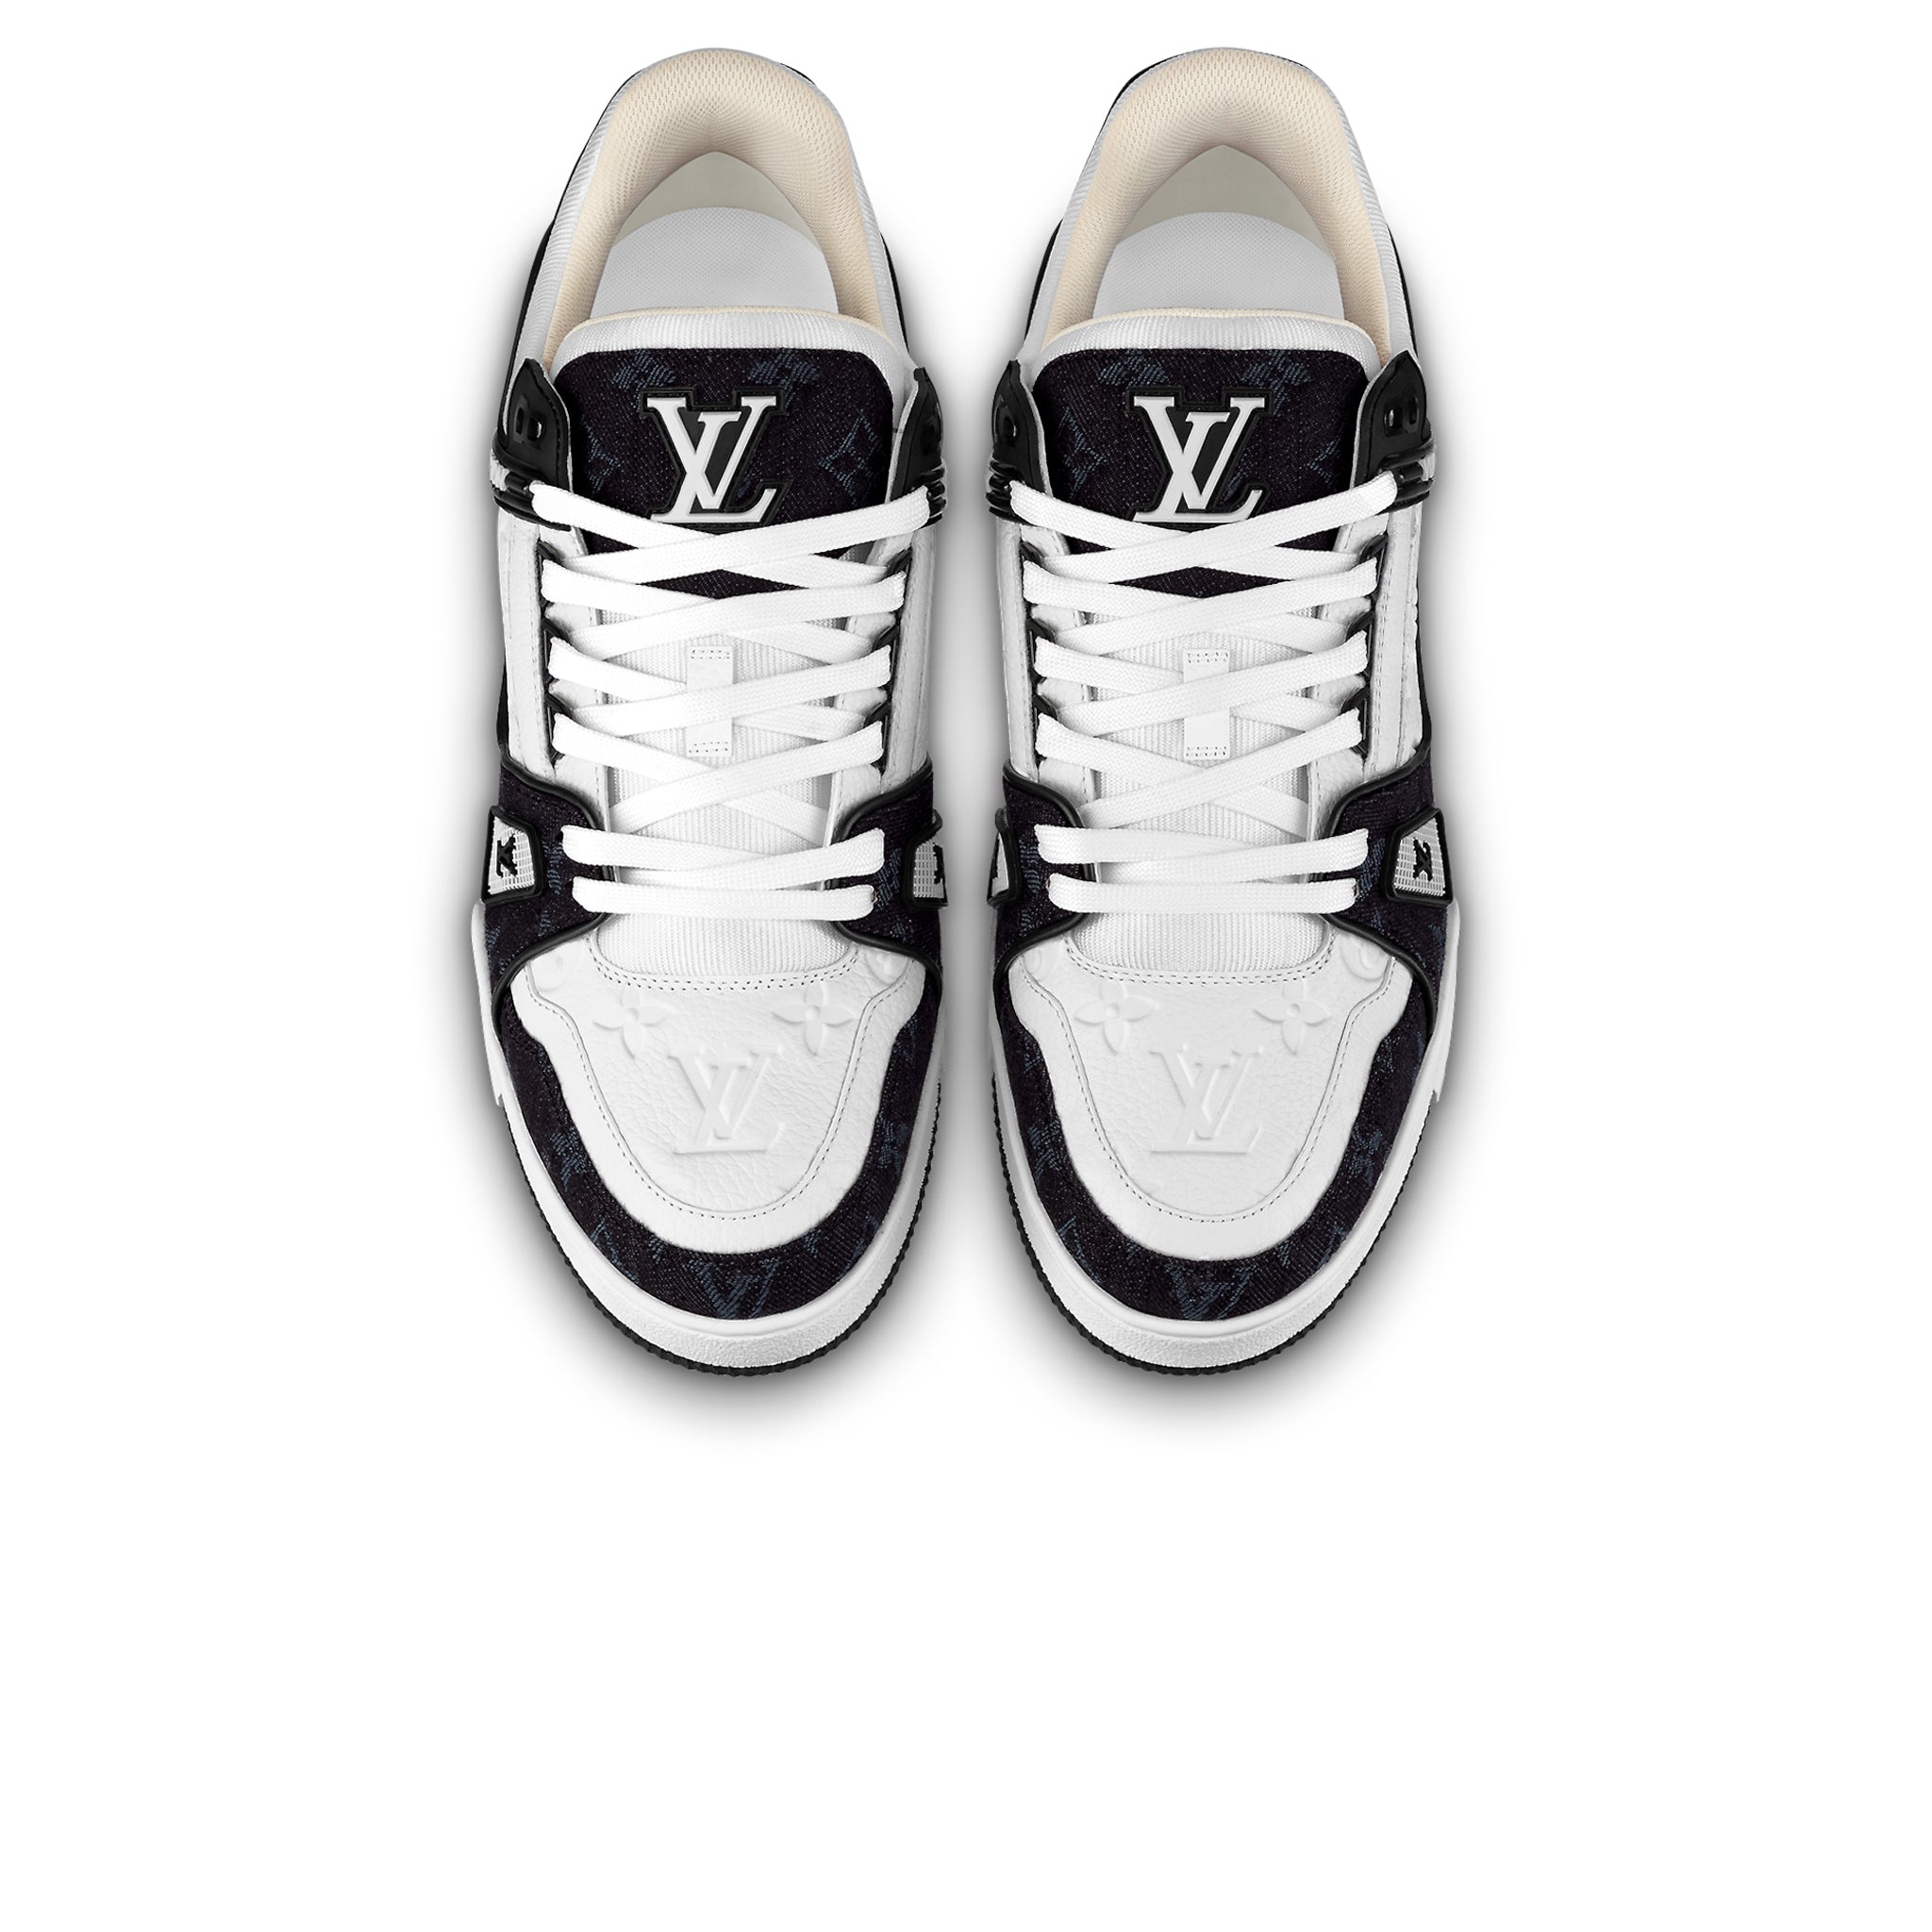 LOUIS VUITTON x NIGO Calfskin Printed LV Trainer Sneaker 9 Black